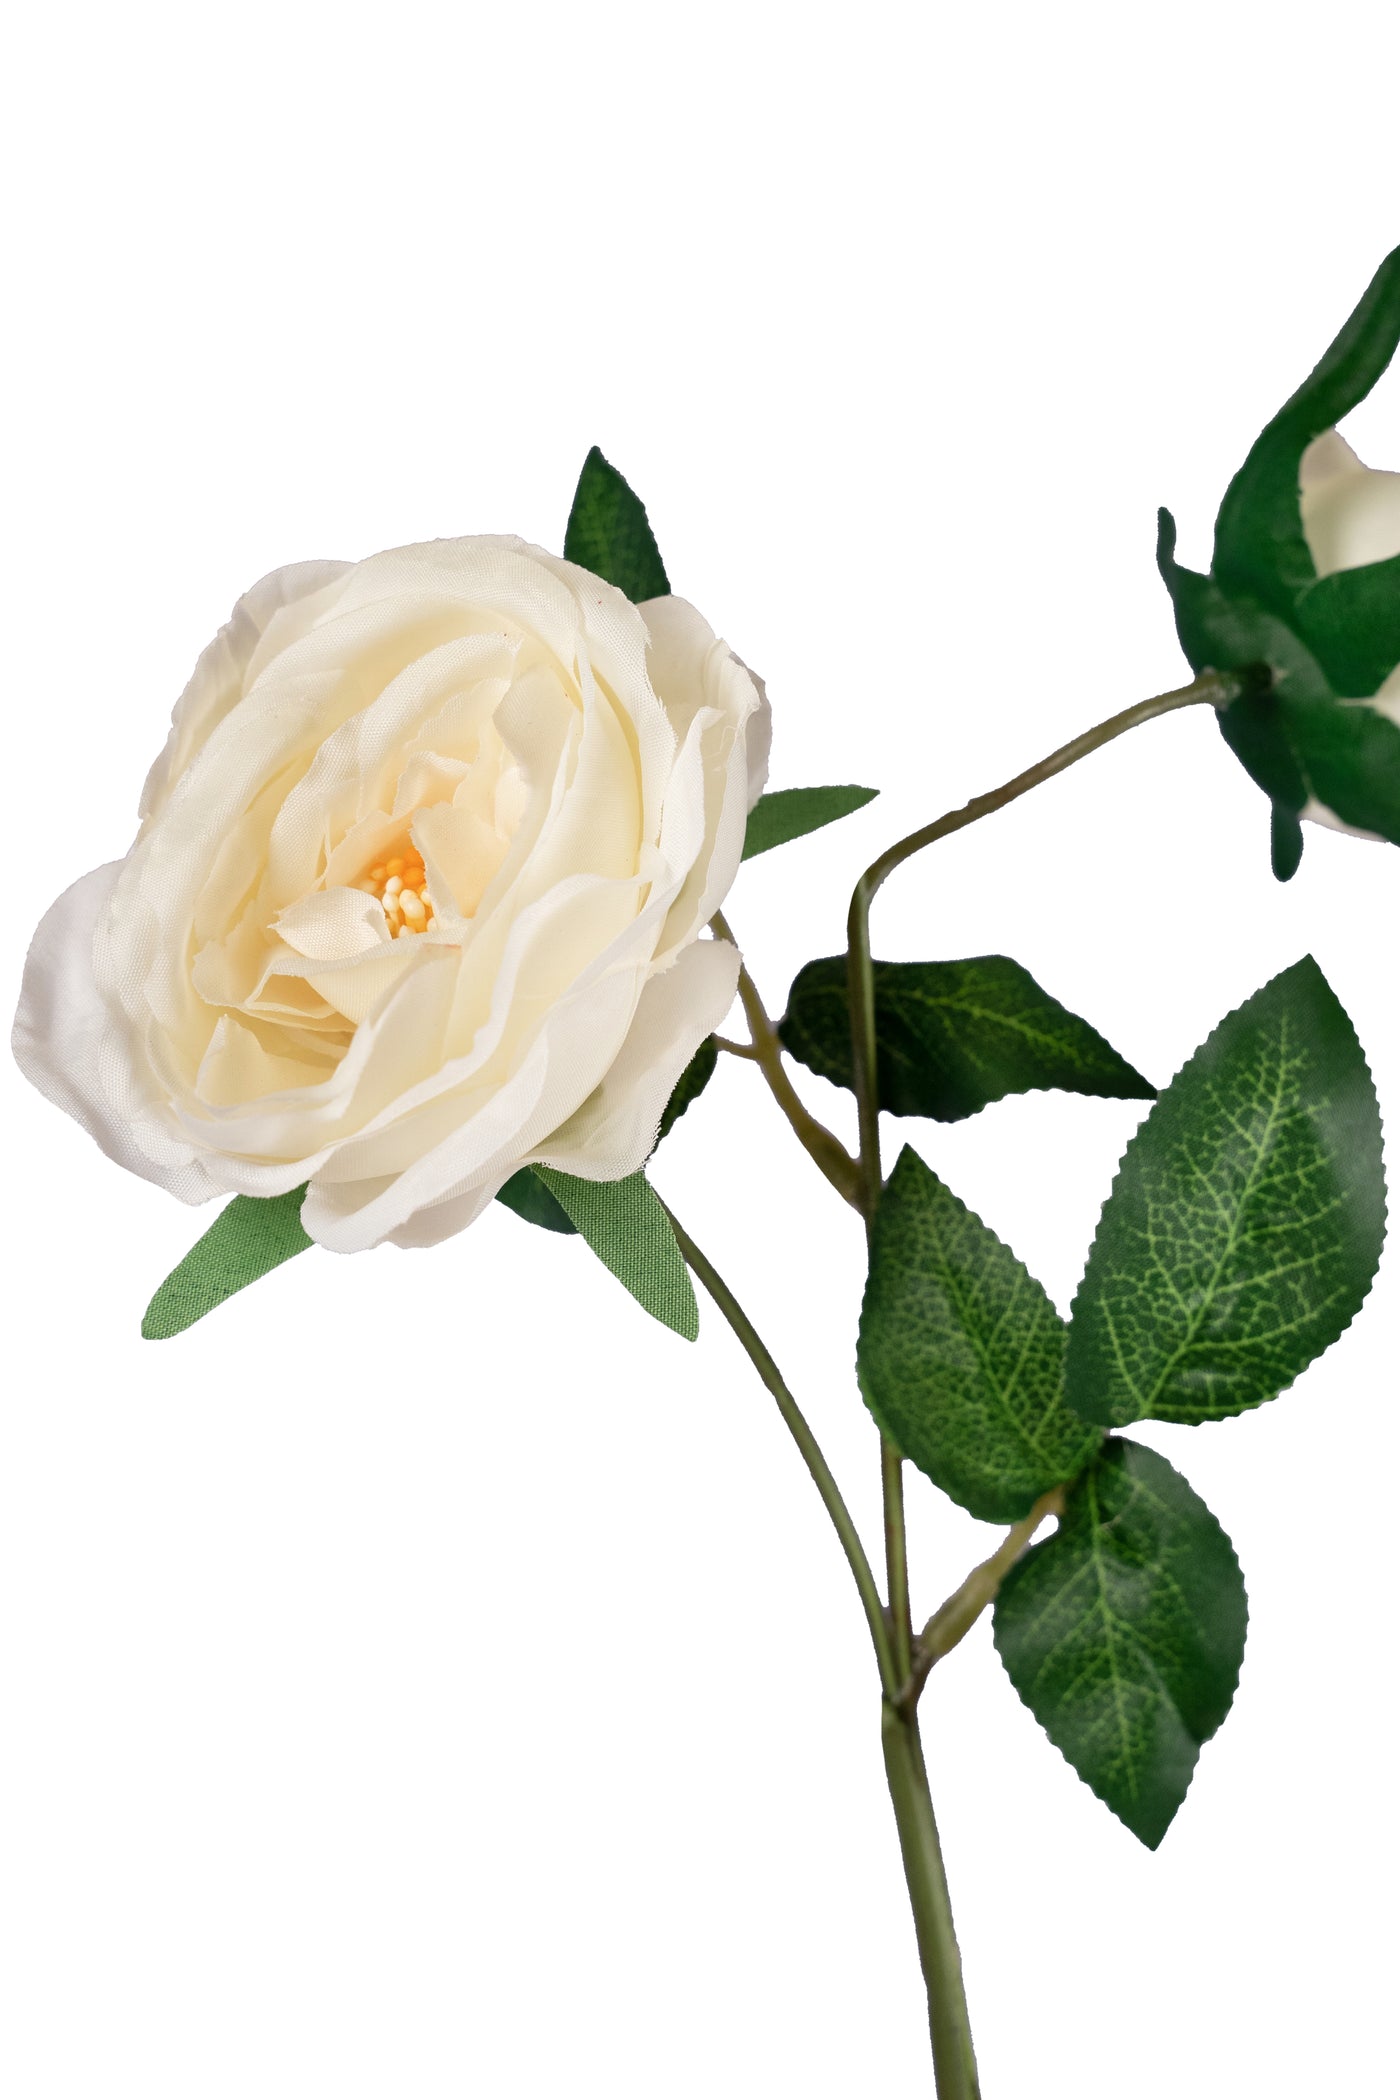 Trandafir tros artificial cu 7 flori albe H75 cm